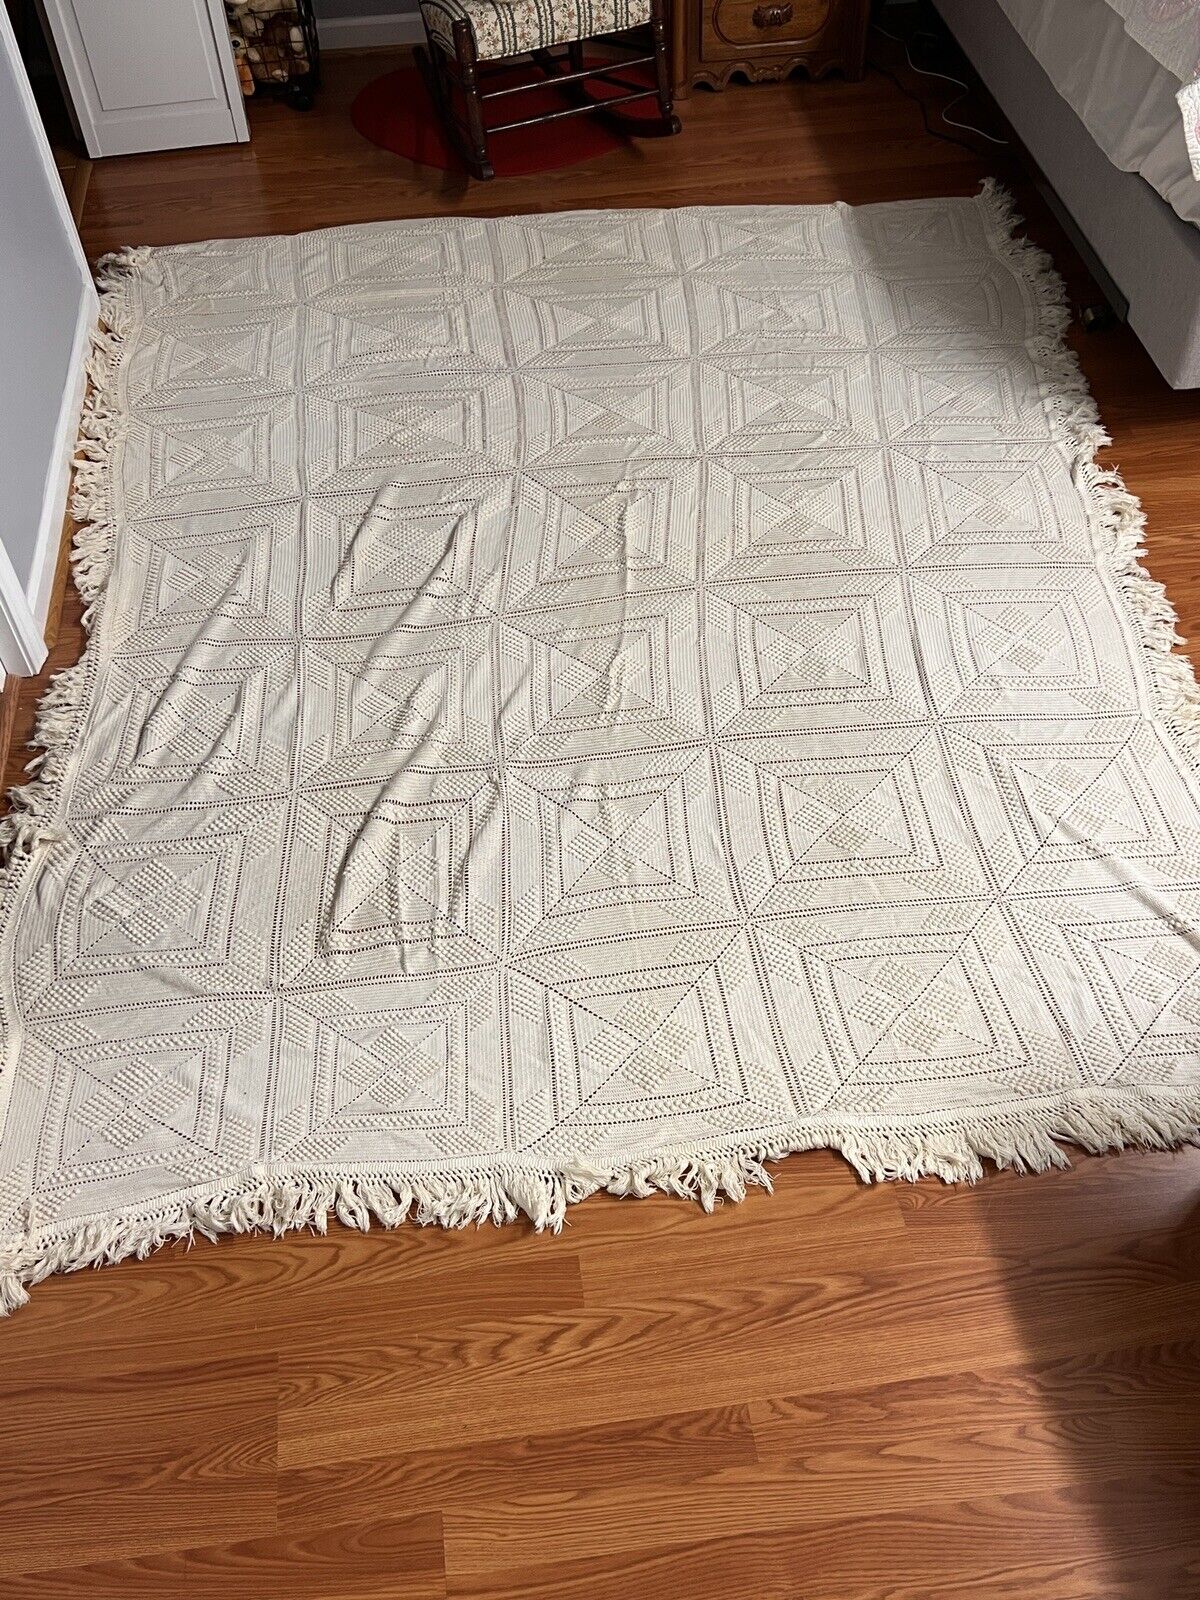 vintage hand crochet bedspread